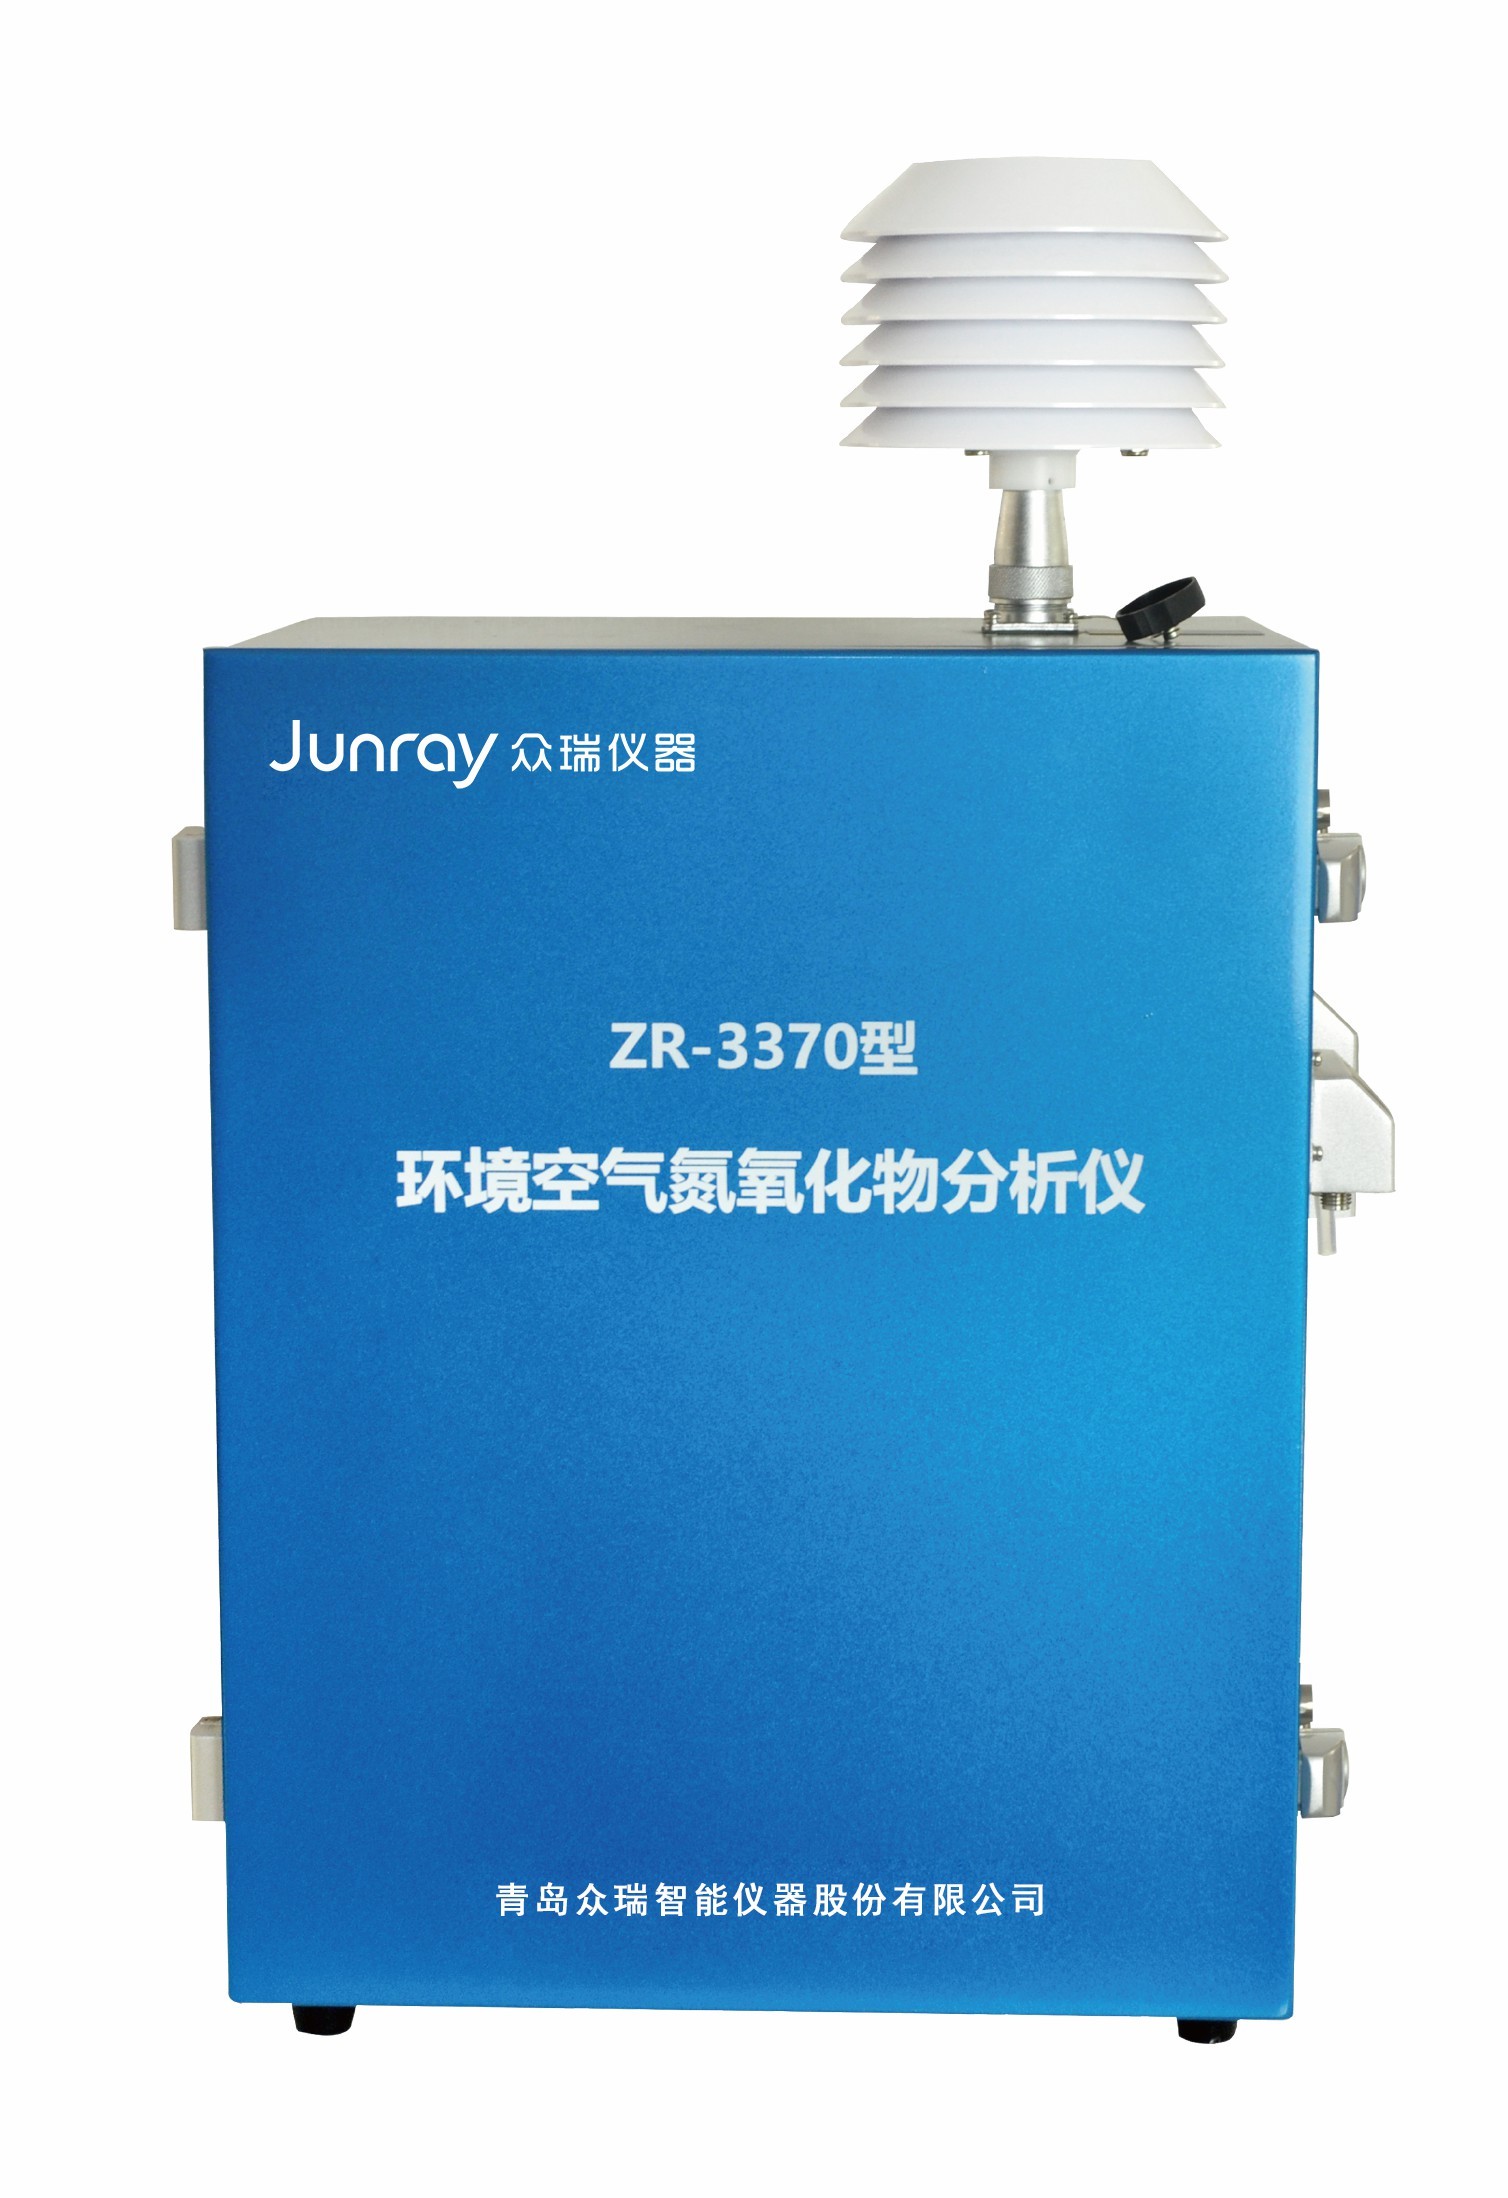 ZR-3370型环境空气氮氧化物分析仪